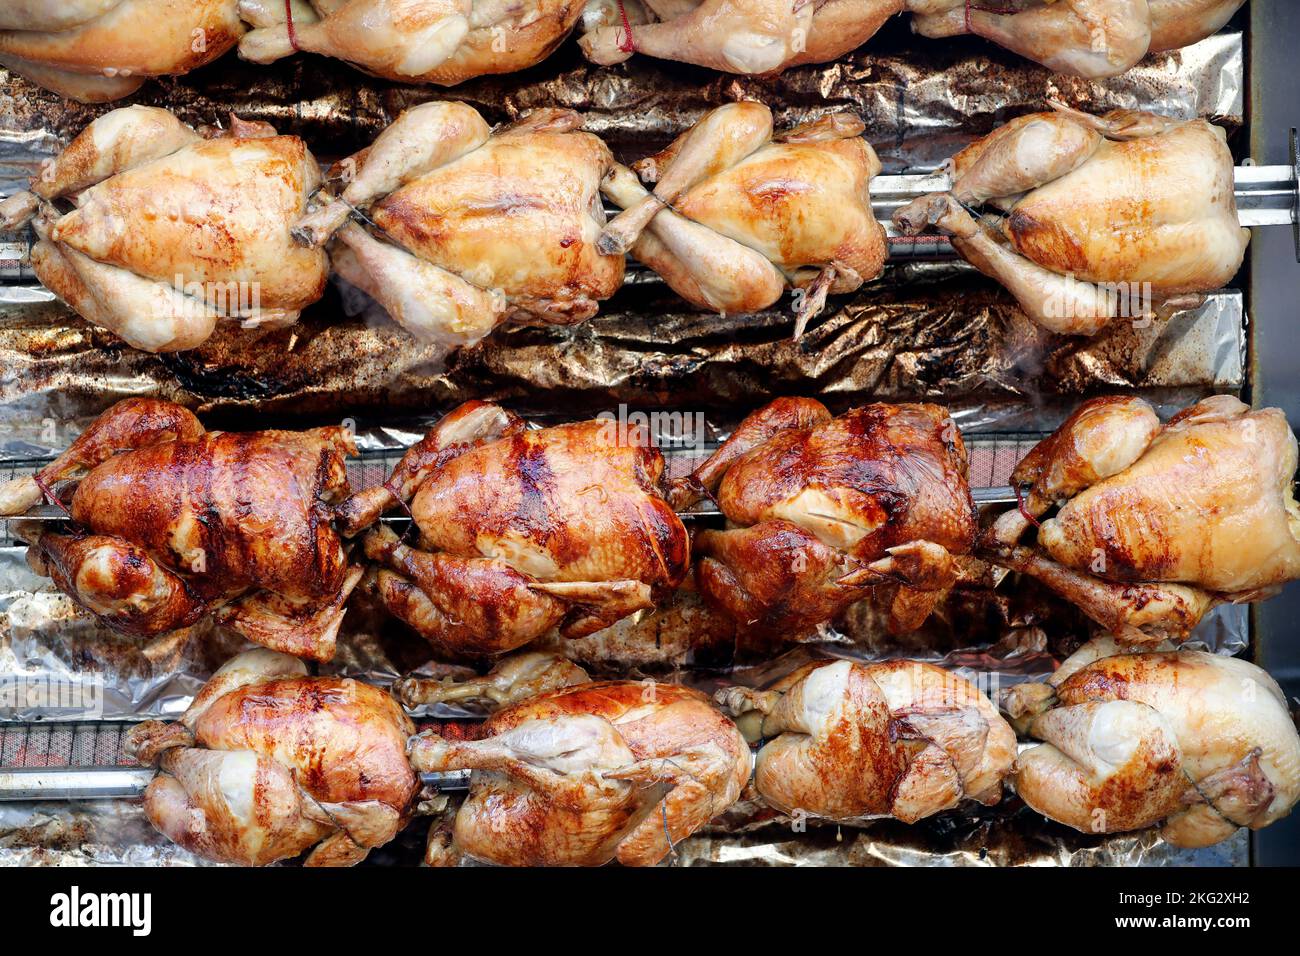 https://c8.alamy.com/comp/2KG2XH2/fresh-roasted-chickens-for-sale-on-food-street-market-france-2KG2XH2.jpg